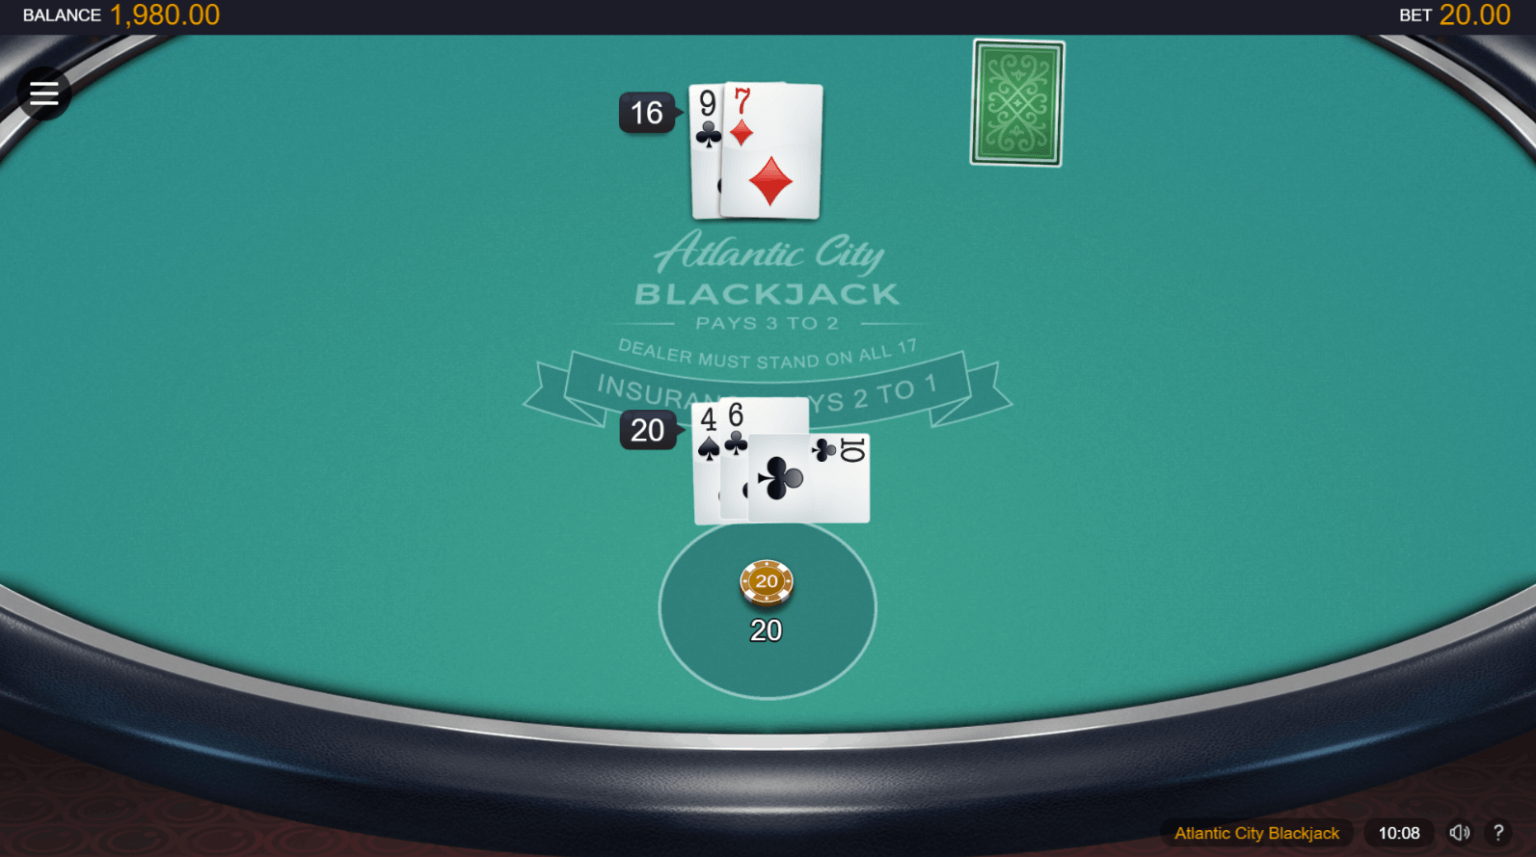 A screenshot of Atlantic City Blackjack where the player has a total of 20